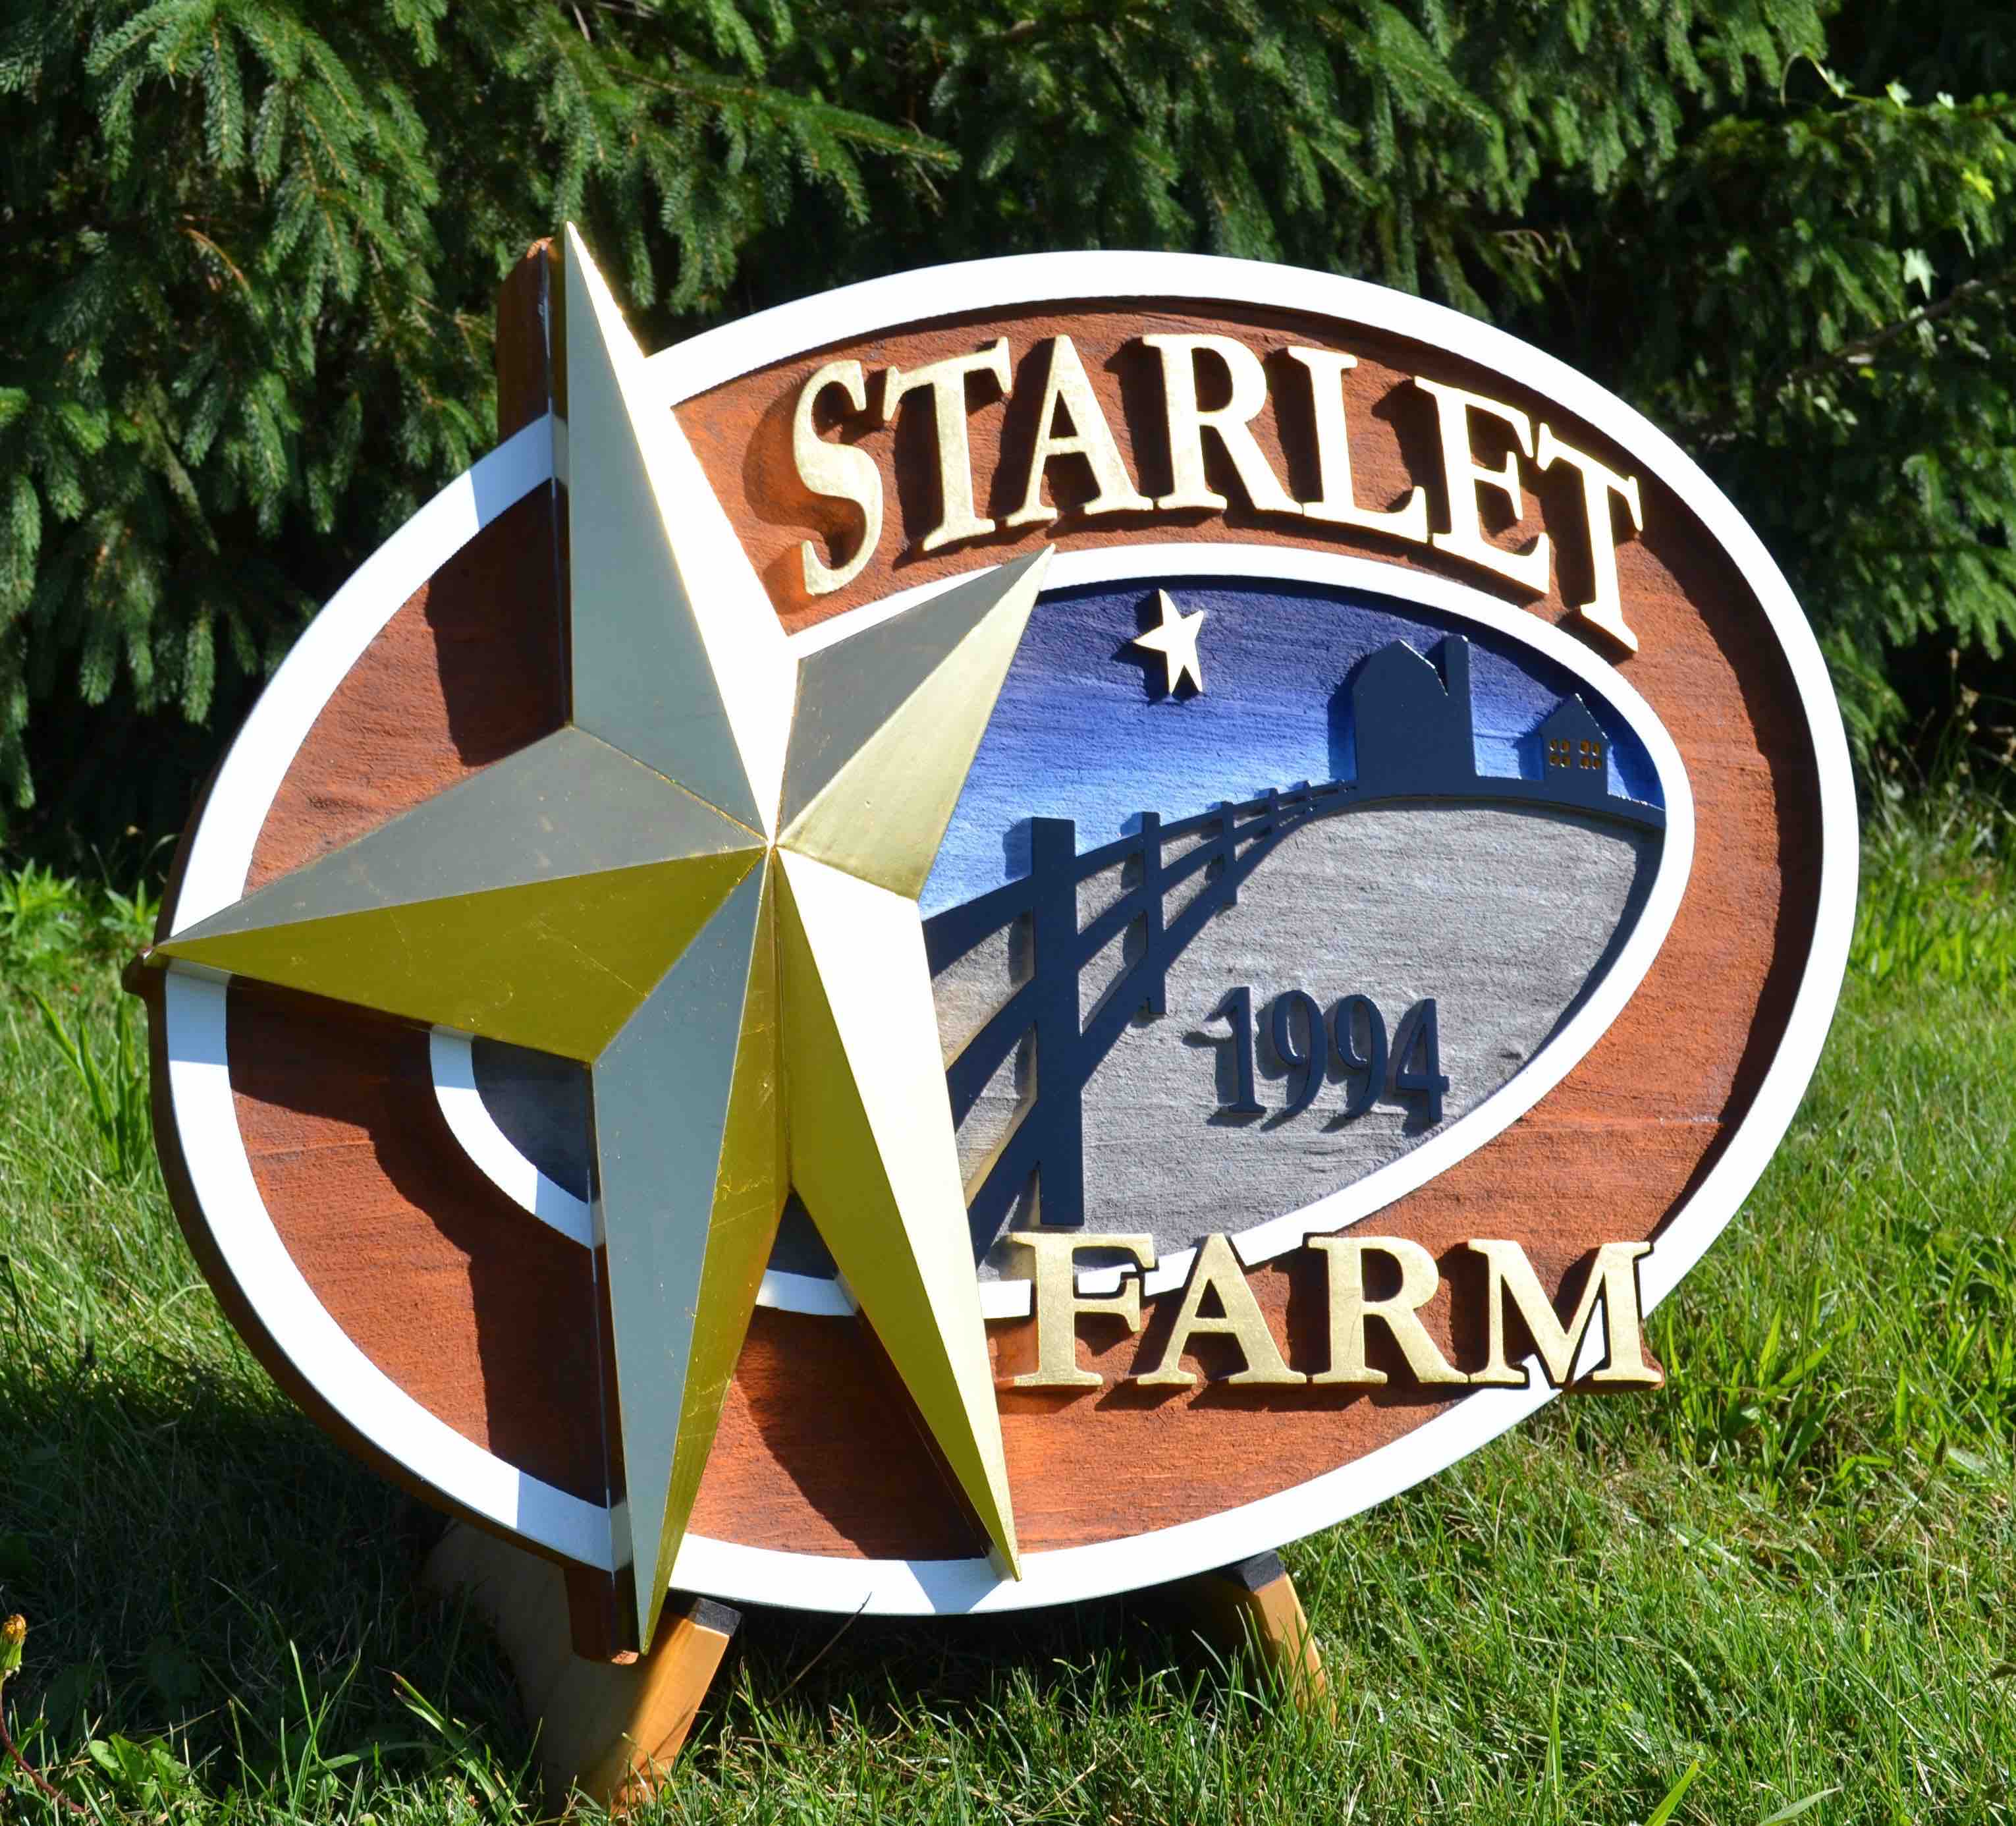 Starlet Farm